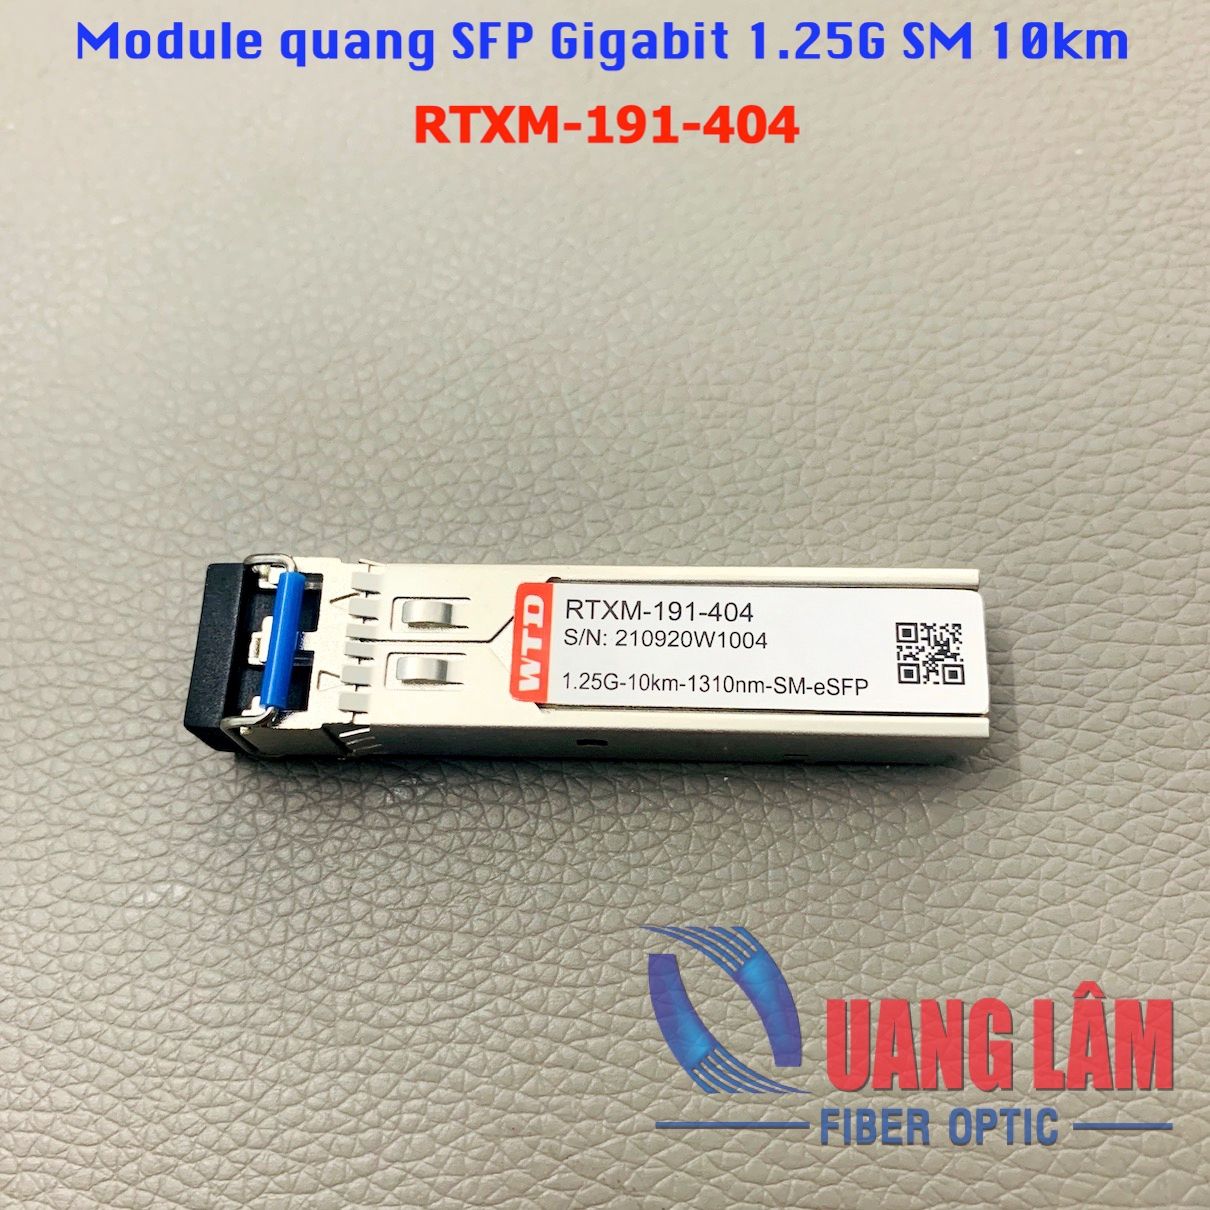 Module quang SFP Gigabit Single Mode 1.25G-10km-1310nm-ESFP RTXM 191-400